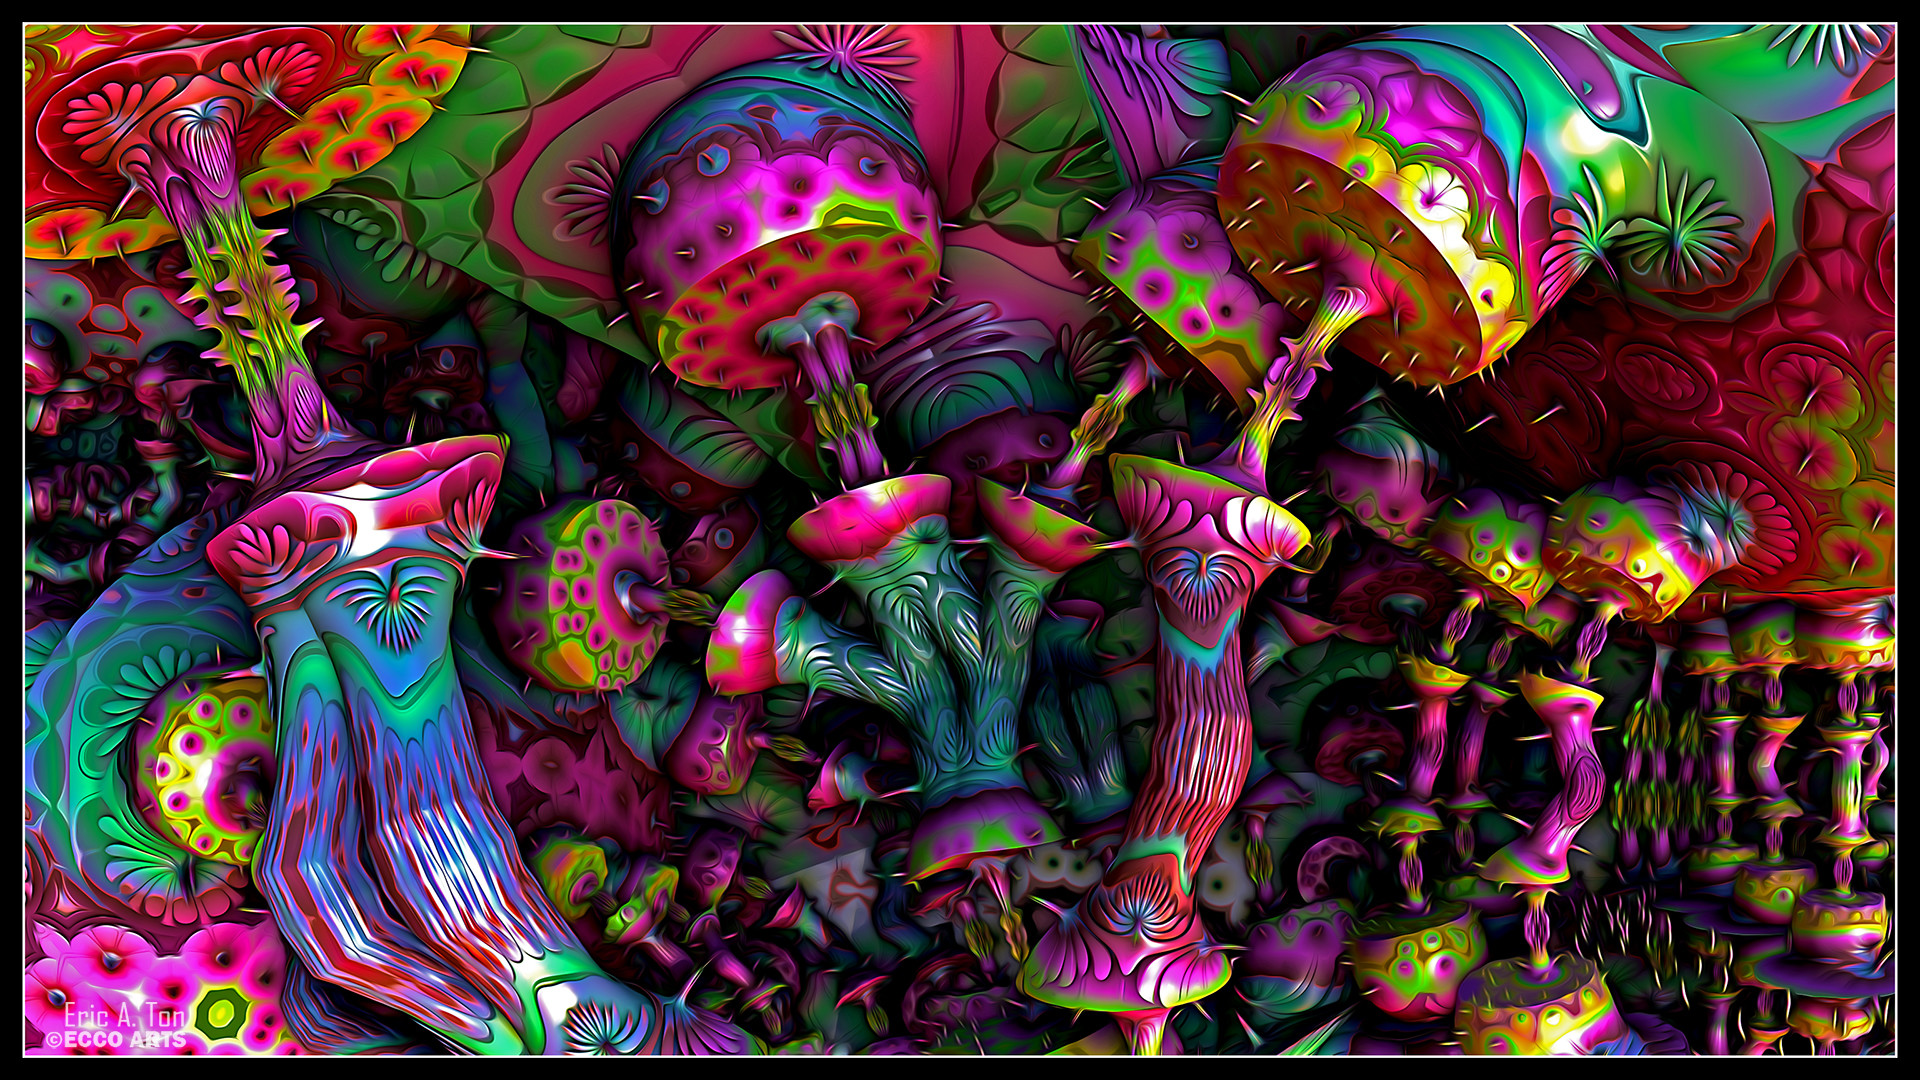 1920x1080 Psychedelic Mushrooms by eccoarts on DeviantArt